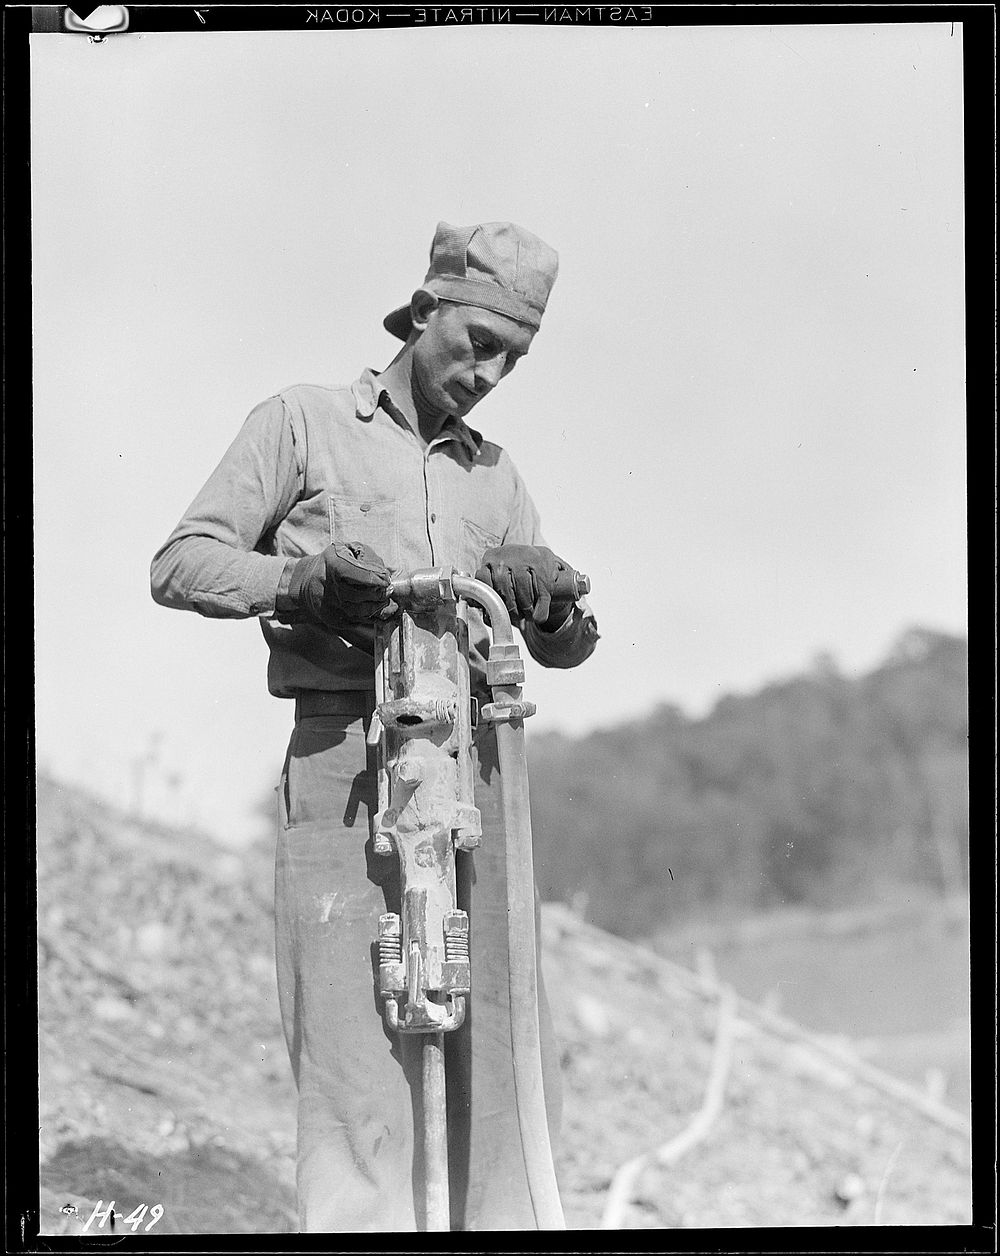 Rock-driller at Norris Dam site, October 1933. Photographer: Hine, Lewis. Original public domain image from Flickr